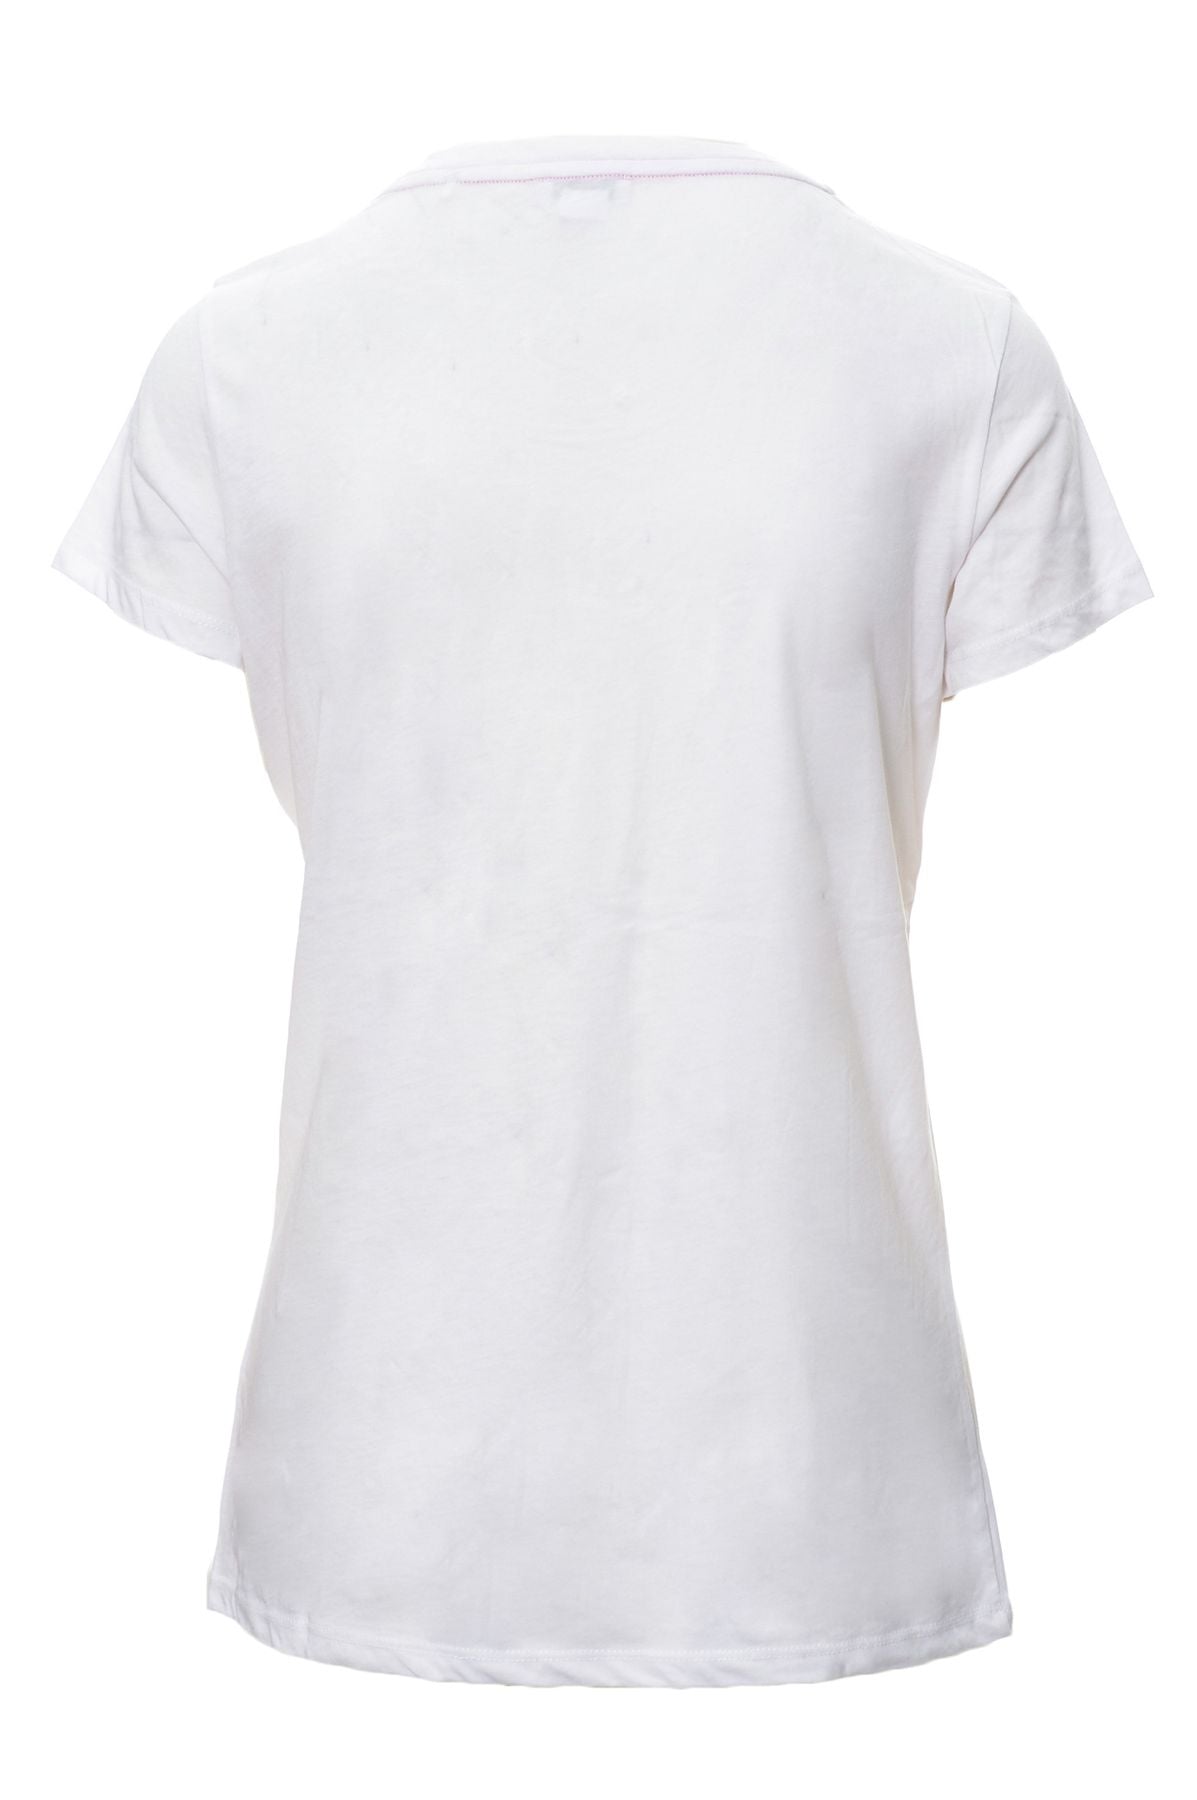 USPOLO Spring/Summer Cotton T-shirt